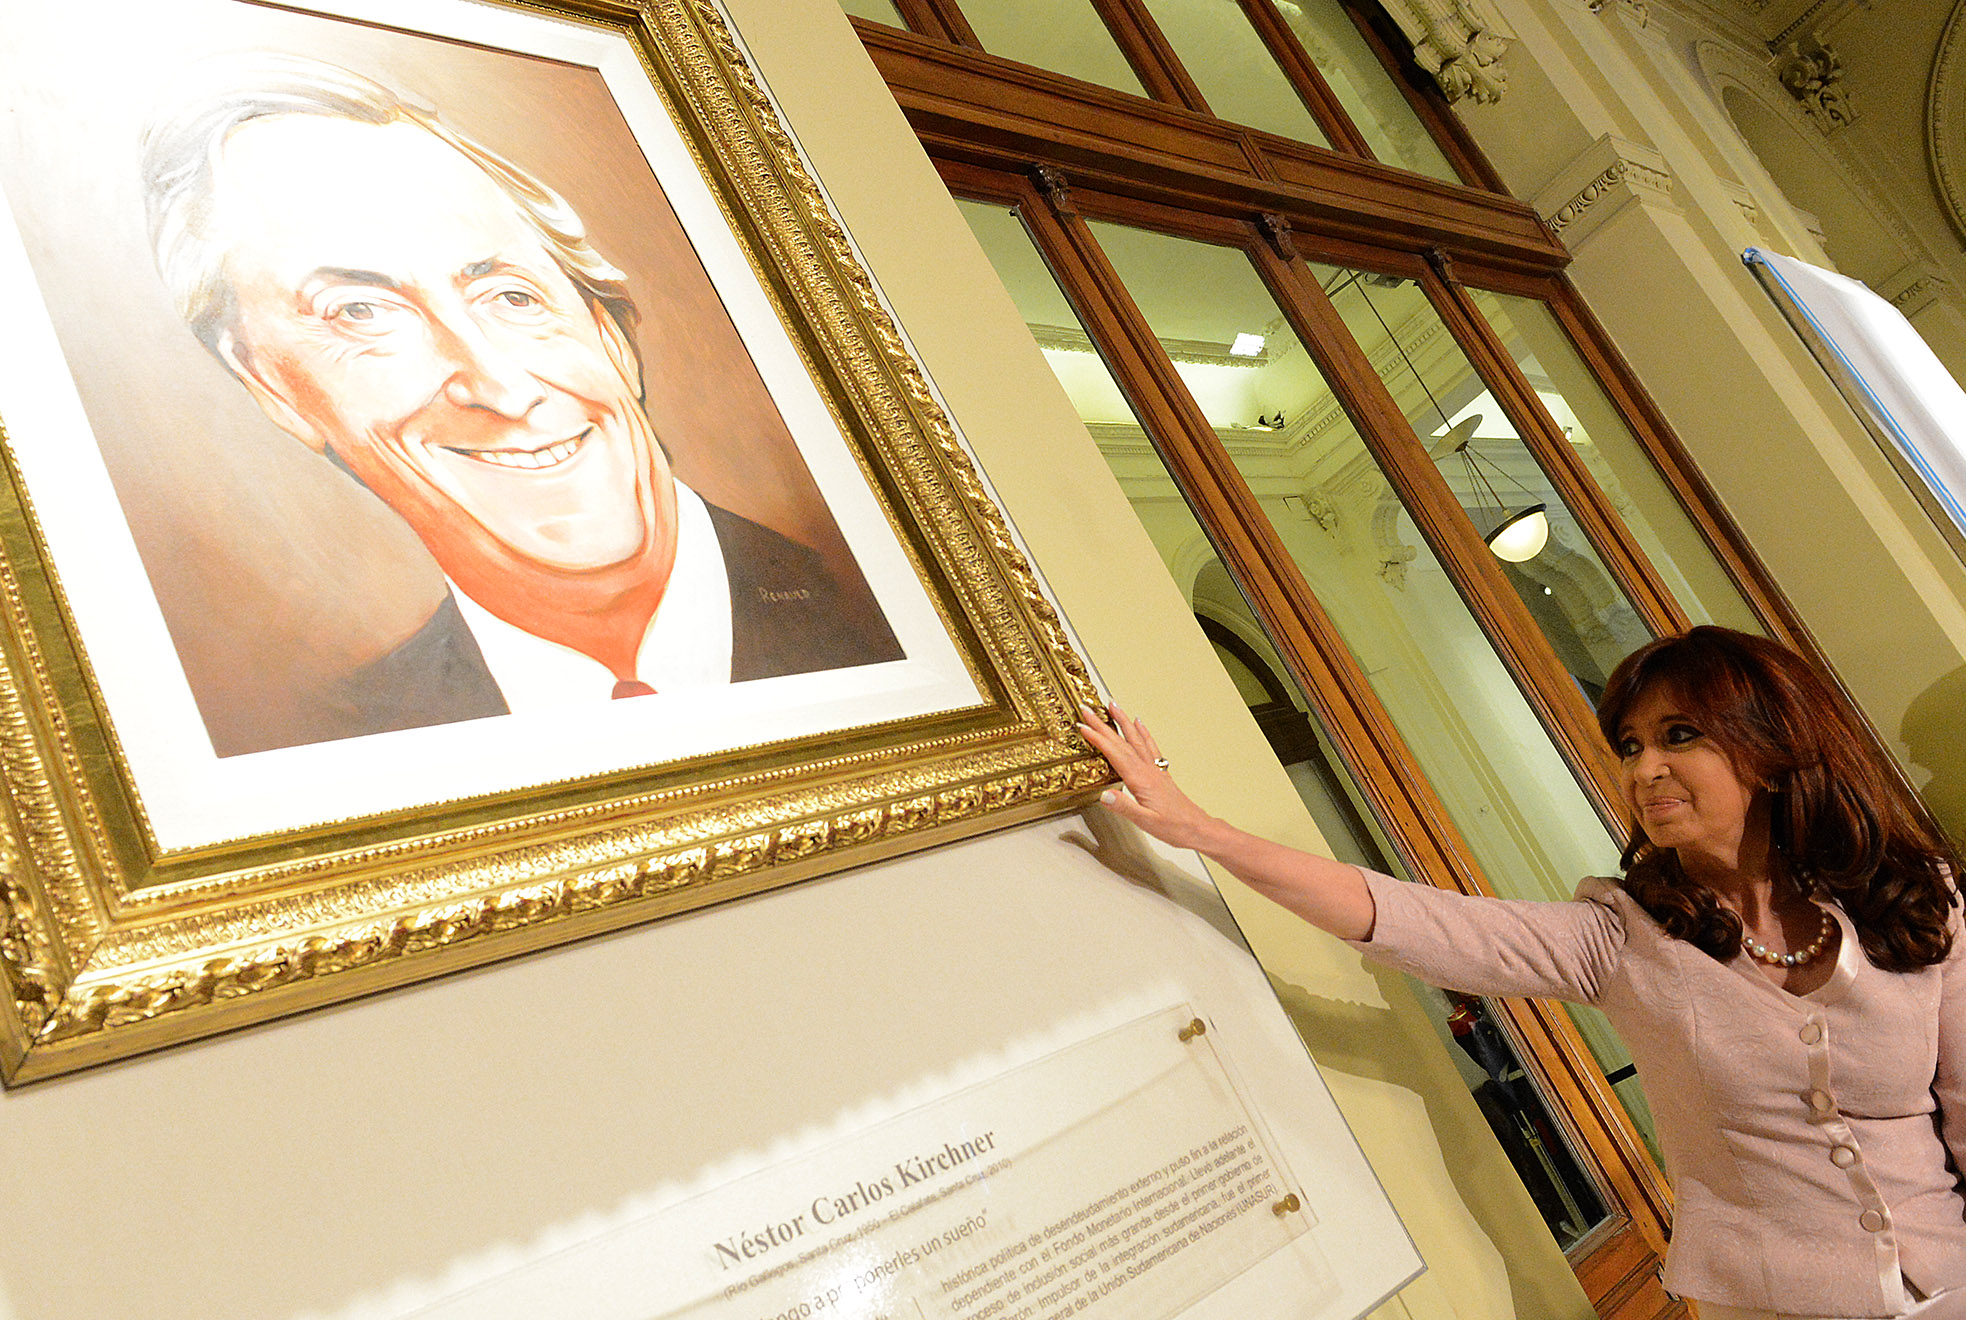 Cristina Fernández en homenaje a Néstor Kirchner en Casa de Gobierno